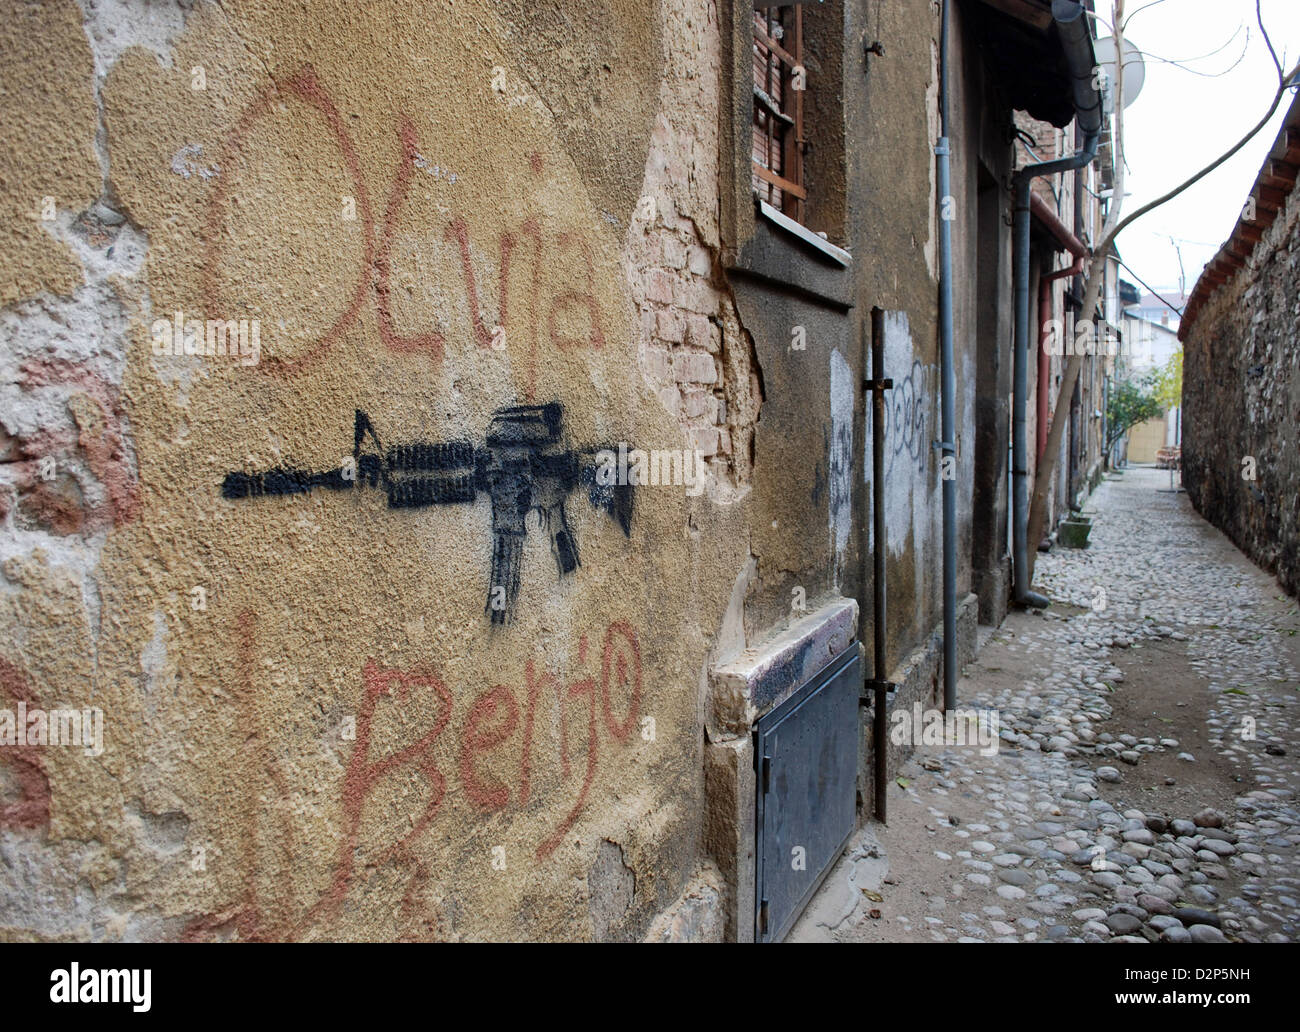 Gun graffiti on wall in Sarajevo alley. Stock Photo